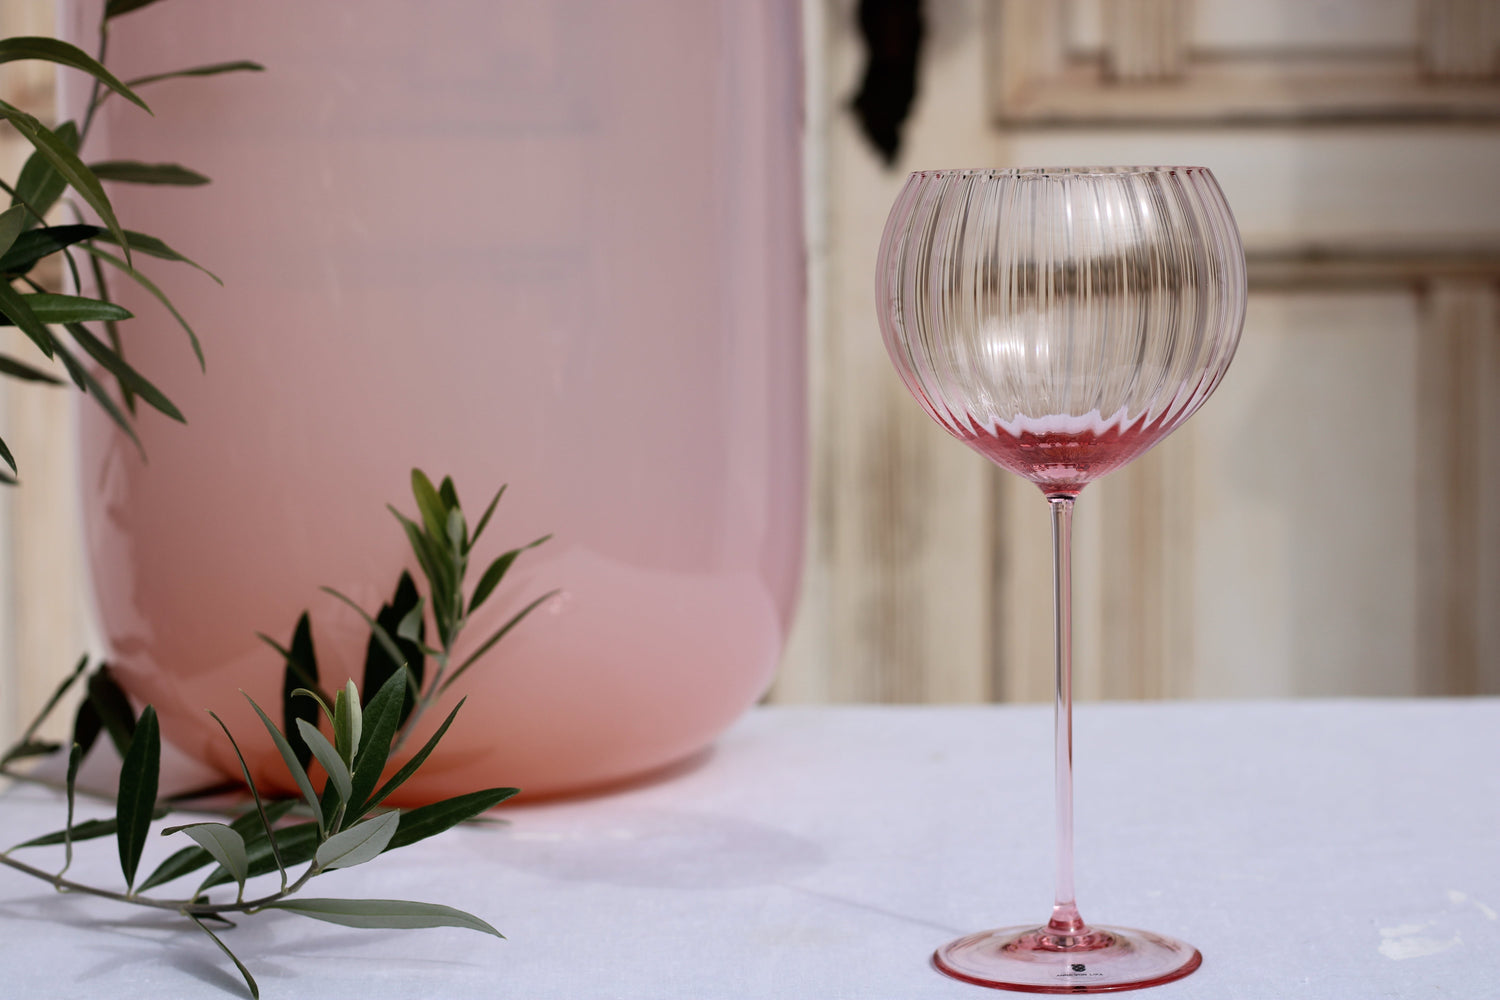 Lyon red wine glass, rose